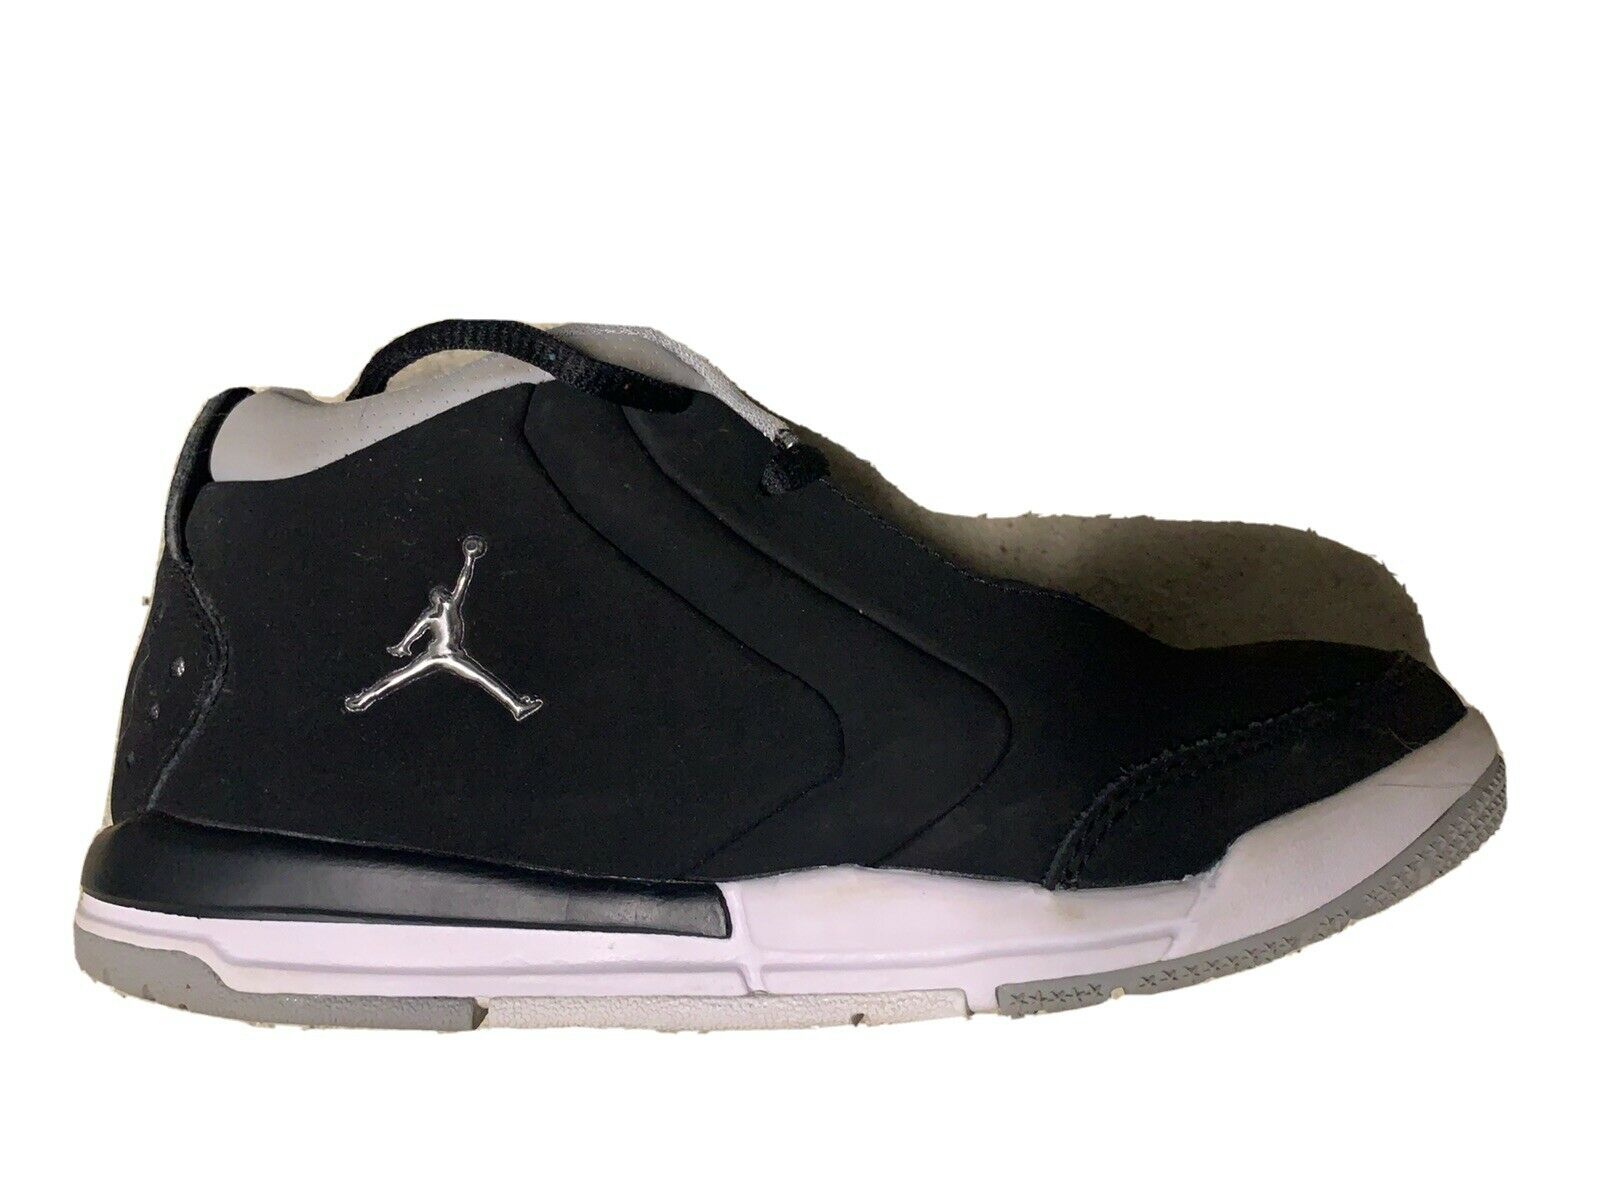 Youth Nike Jordan Jumpman basketball shoes - size 2Y